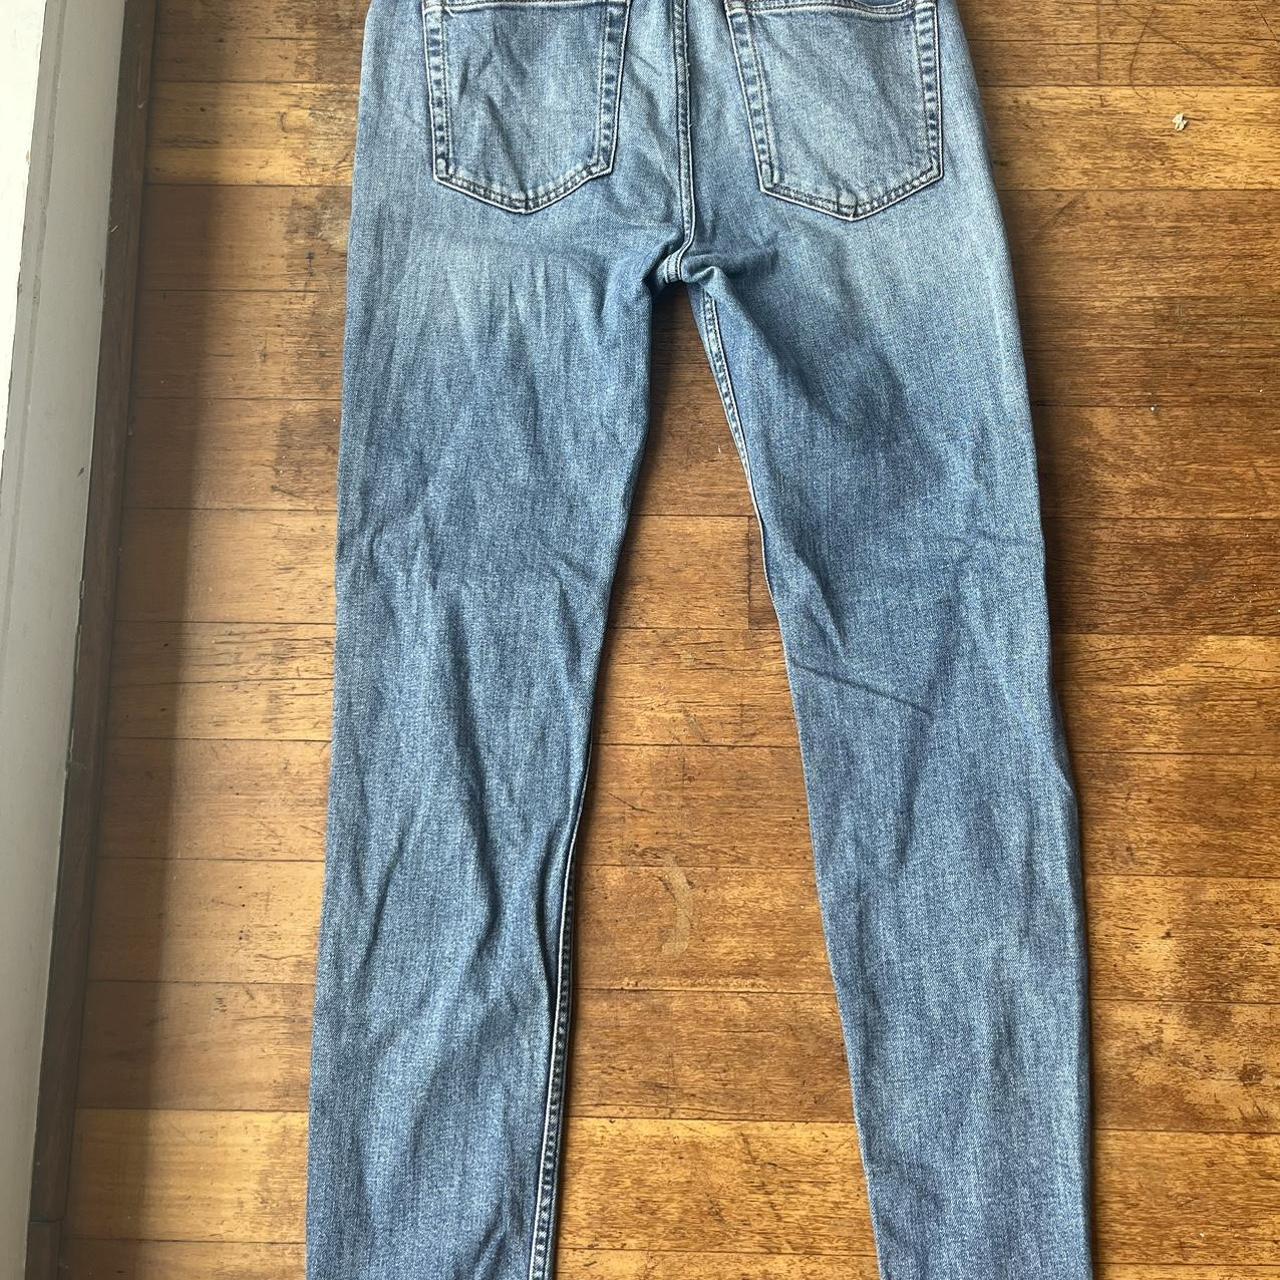 Acne studios north mid blue jeans. 31 waist (fits as... - Depop